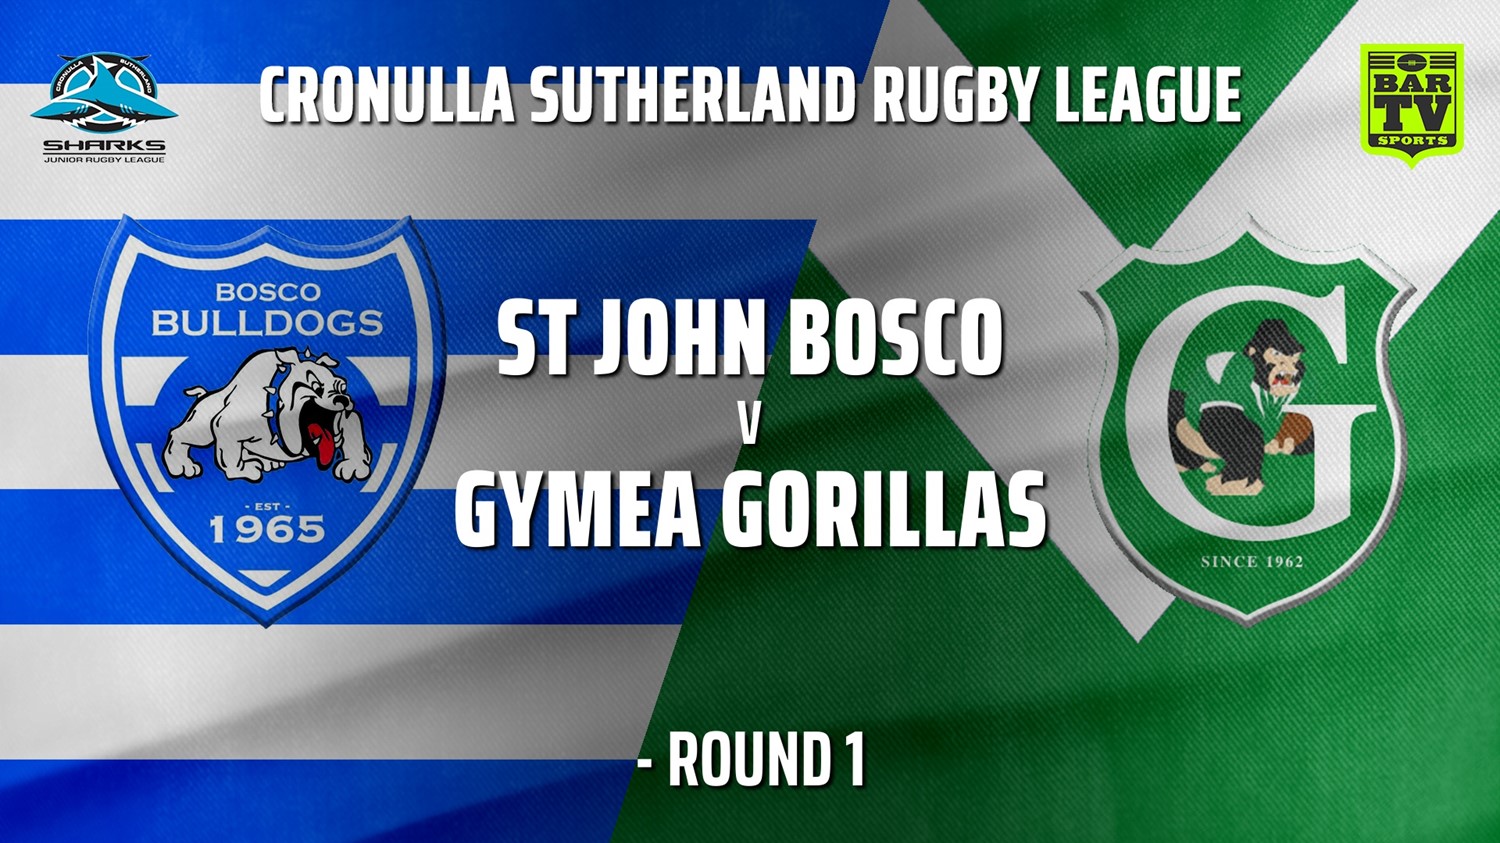 210501-Cronulla JRL Under 6 Yellow - Round 1 - St John Bosco Bulldogs v Gymea Gorillas Minigame Slate Image